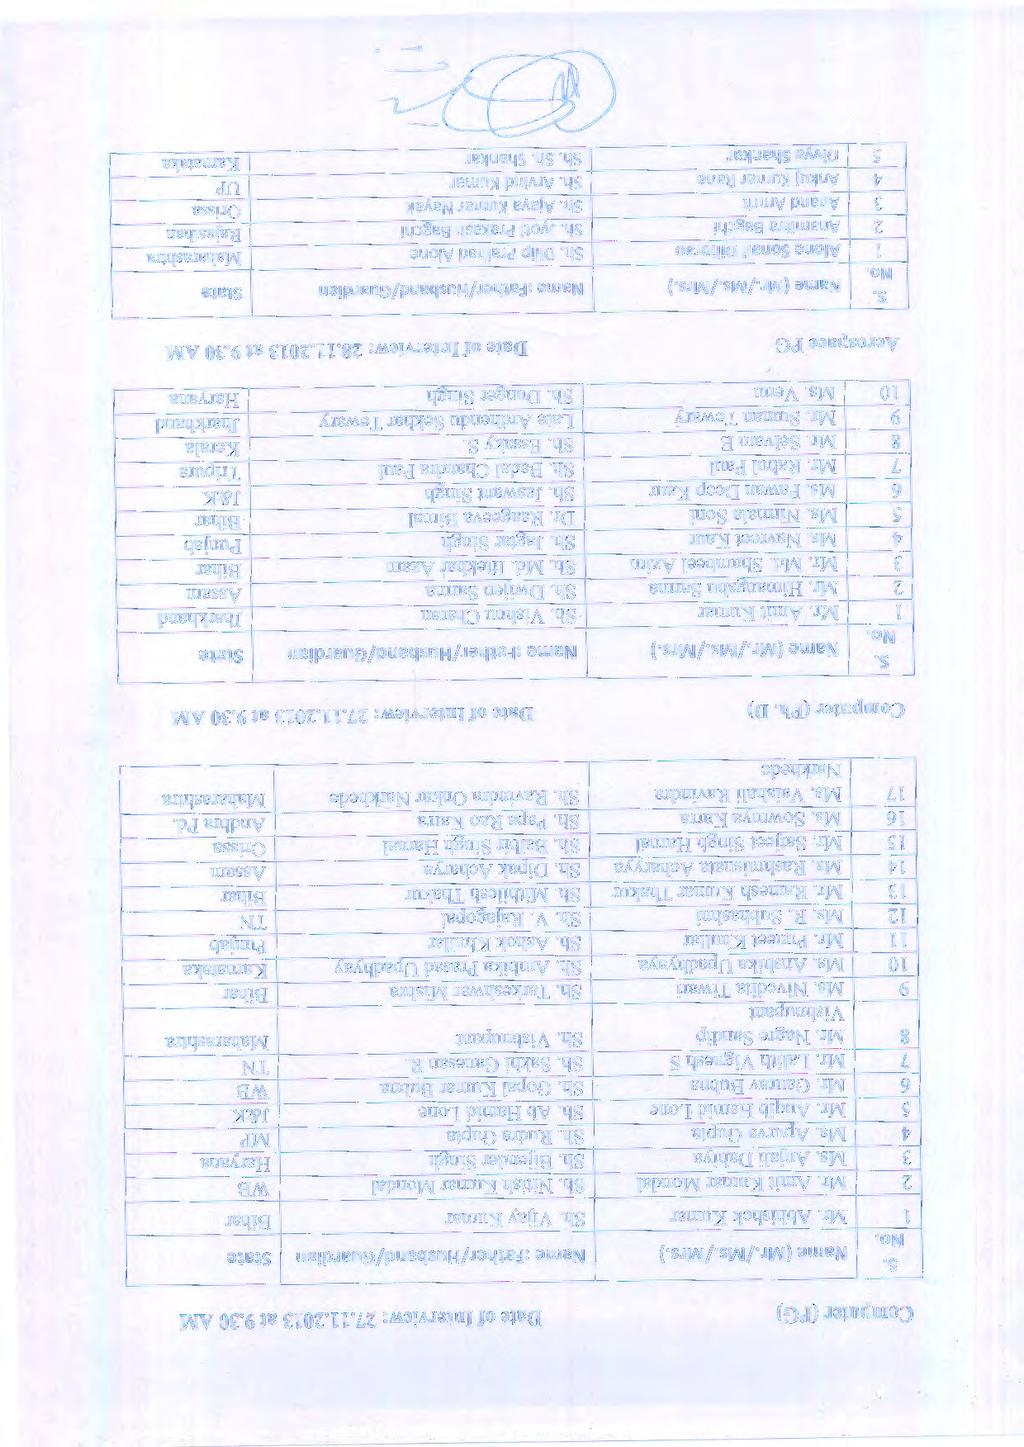 Computer (PG) Date oflnterview: 27.11.2013 at 9.30 AM Name (Mr./M/Mr) Name :Father/Husband/Guardian State 1 Mr. Abhishek Kumar Sh. Vijay Kumar Bihar 2 Mr. Amit Kumar Monda} Sh. Nitish Kumar Monda!